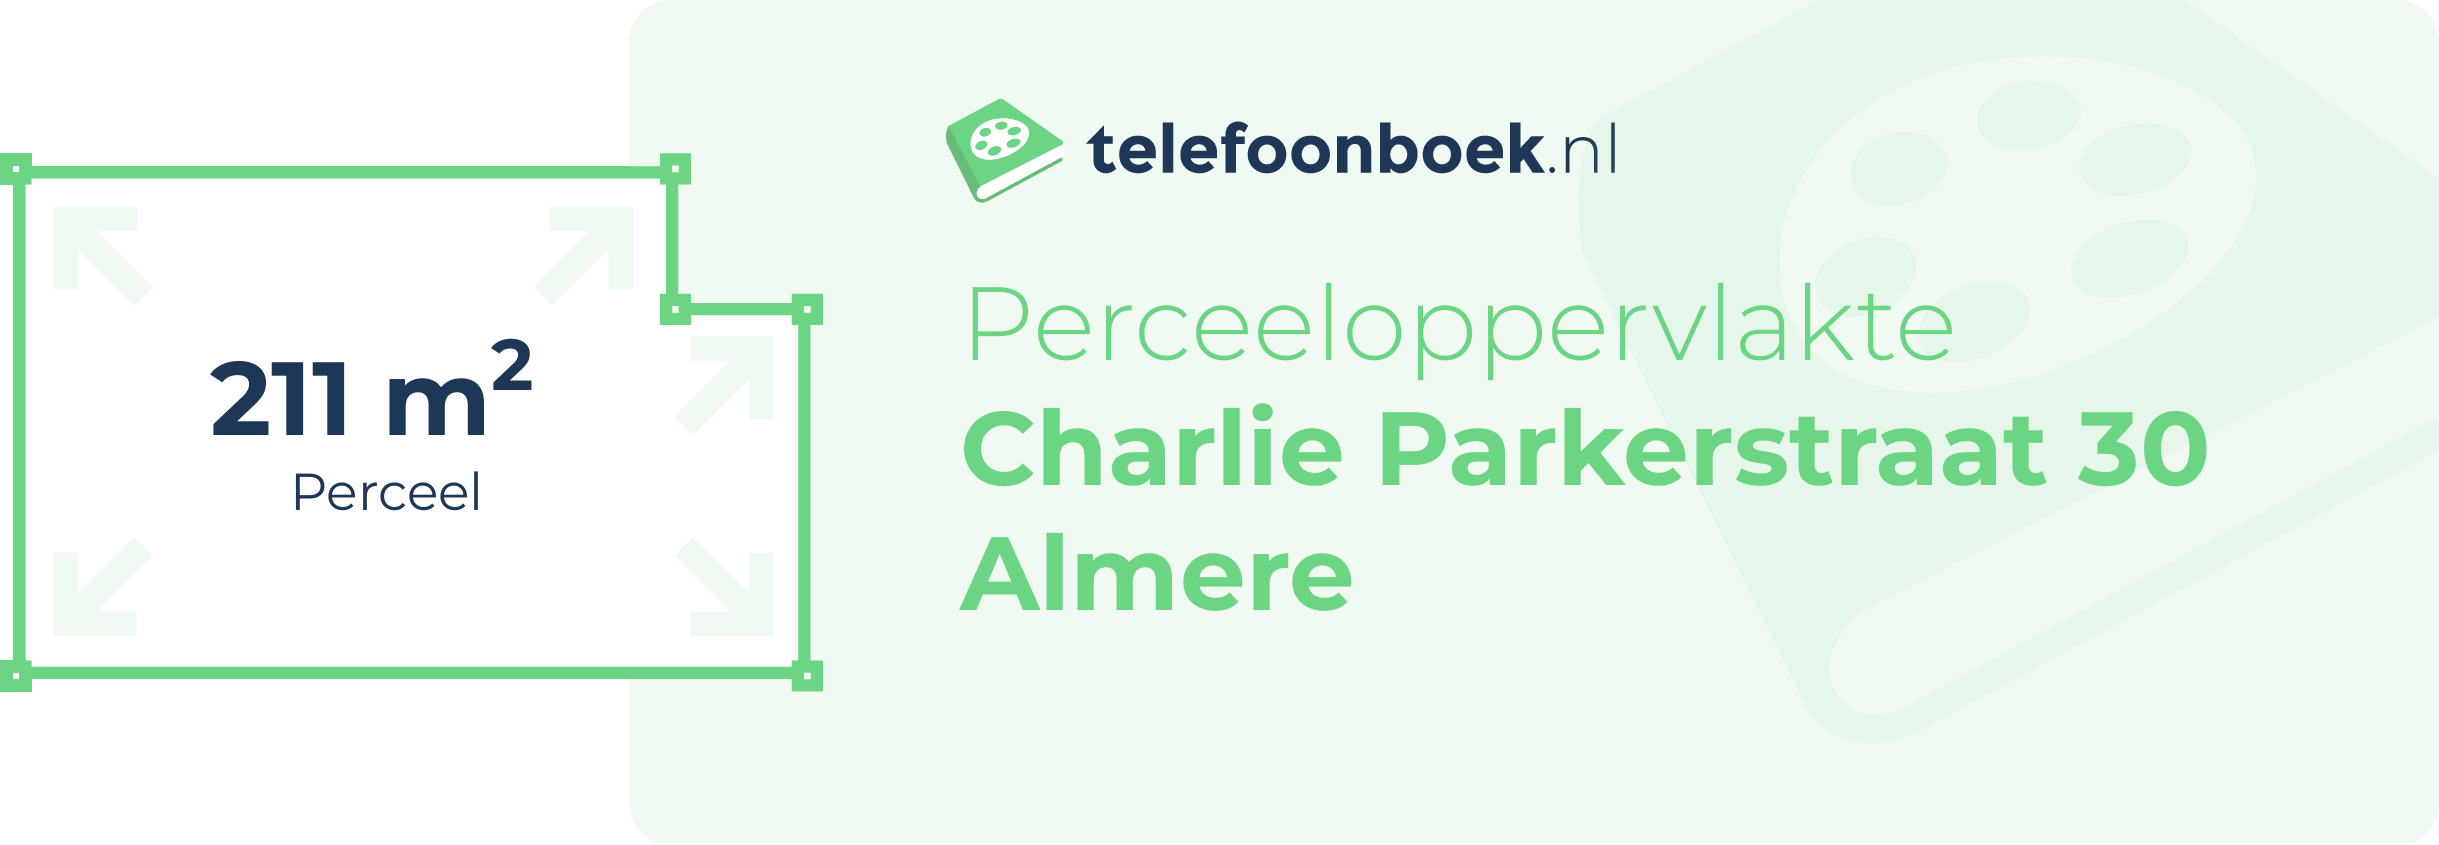 Perceeloppervlakte Charlie Parkerstraat 30 Almere